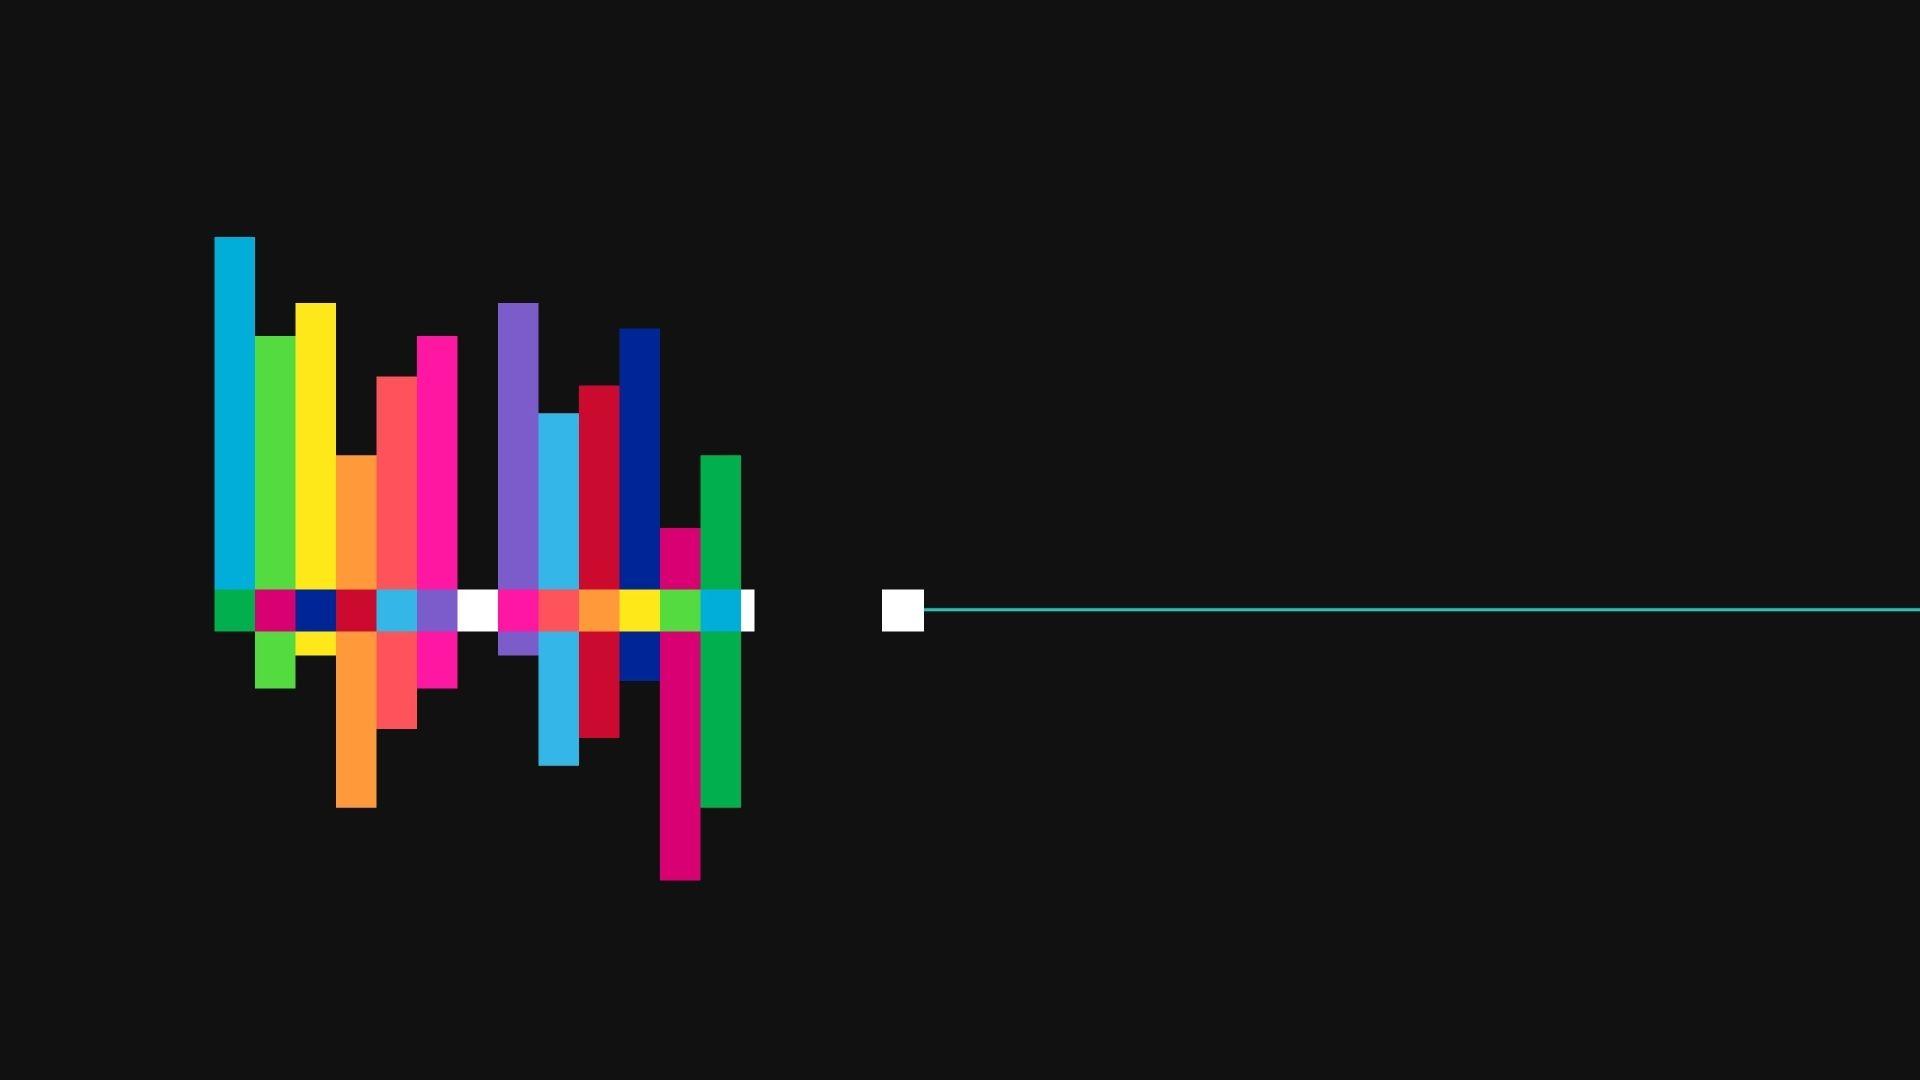 Colorful sound waves Mac Wallpaper Download. Free Mac Wallpaper